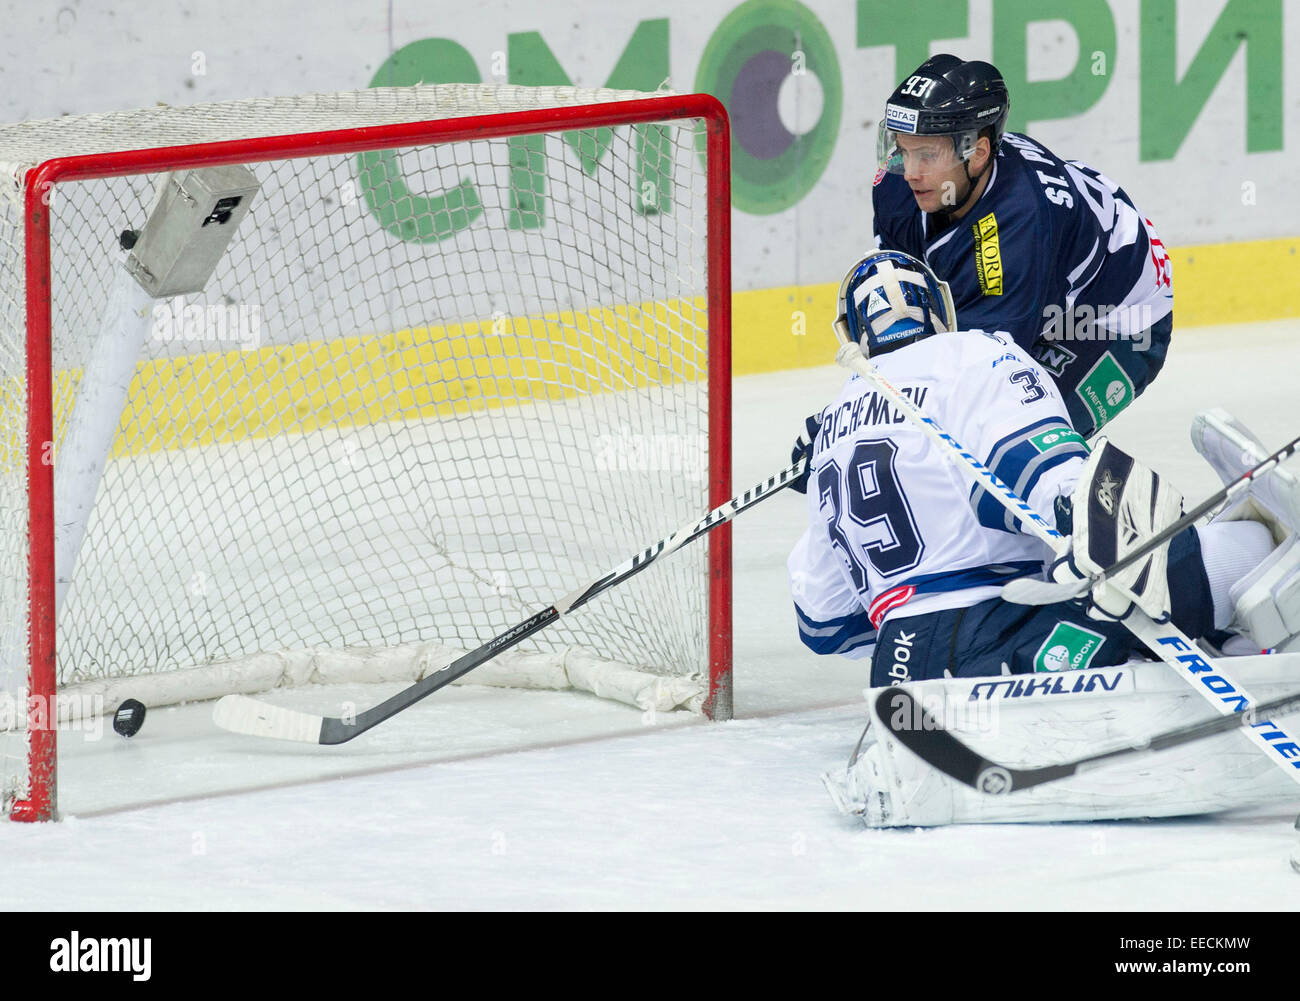 Jokerit beats CSKA during KHL Play-off second round game - Xinhua